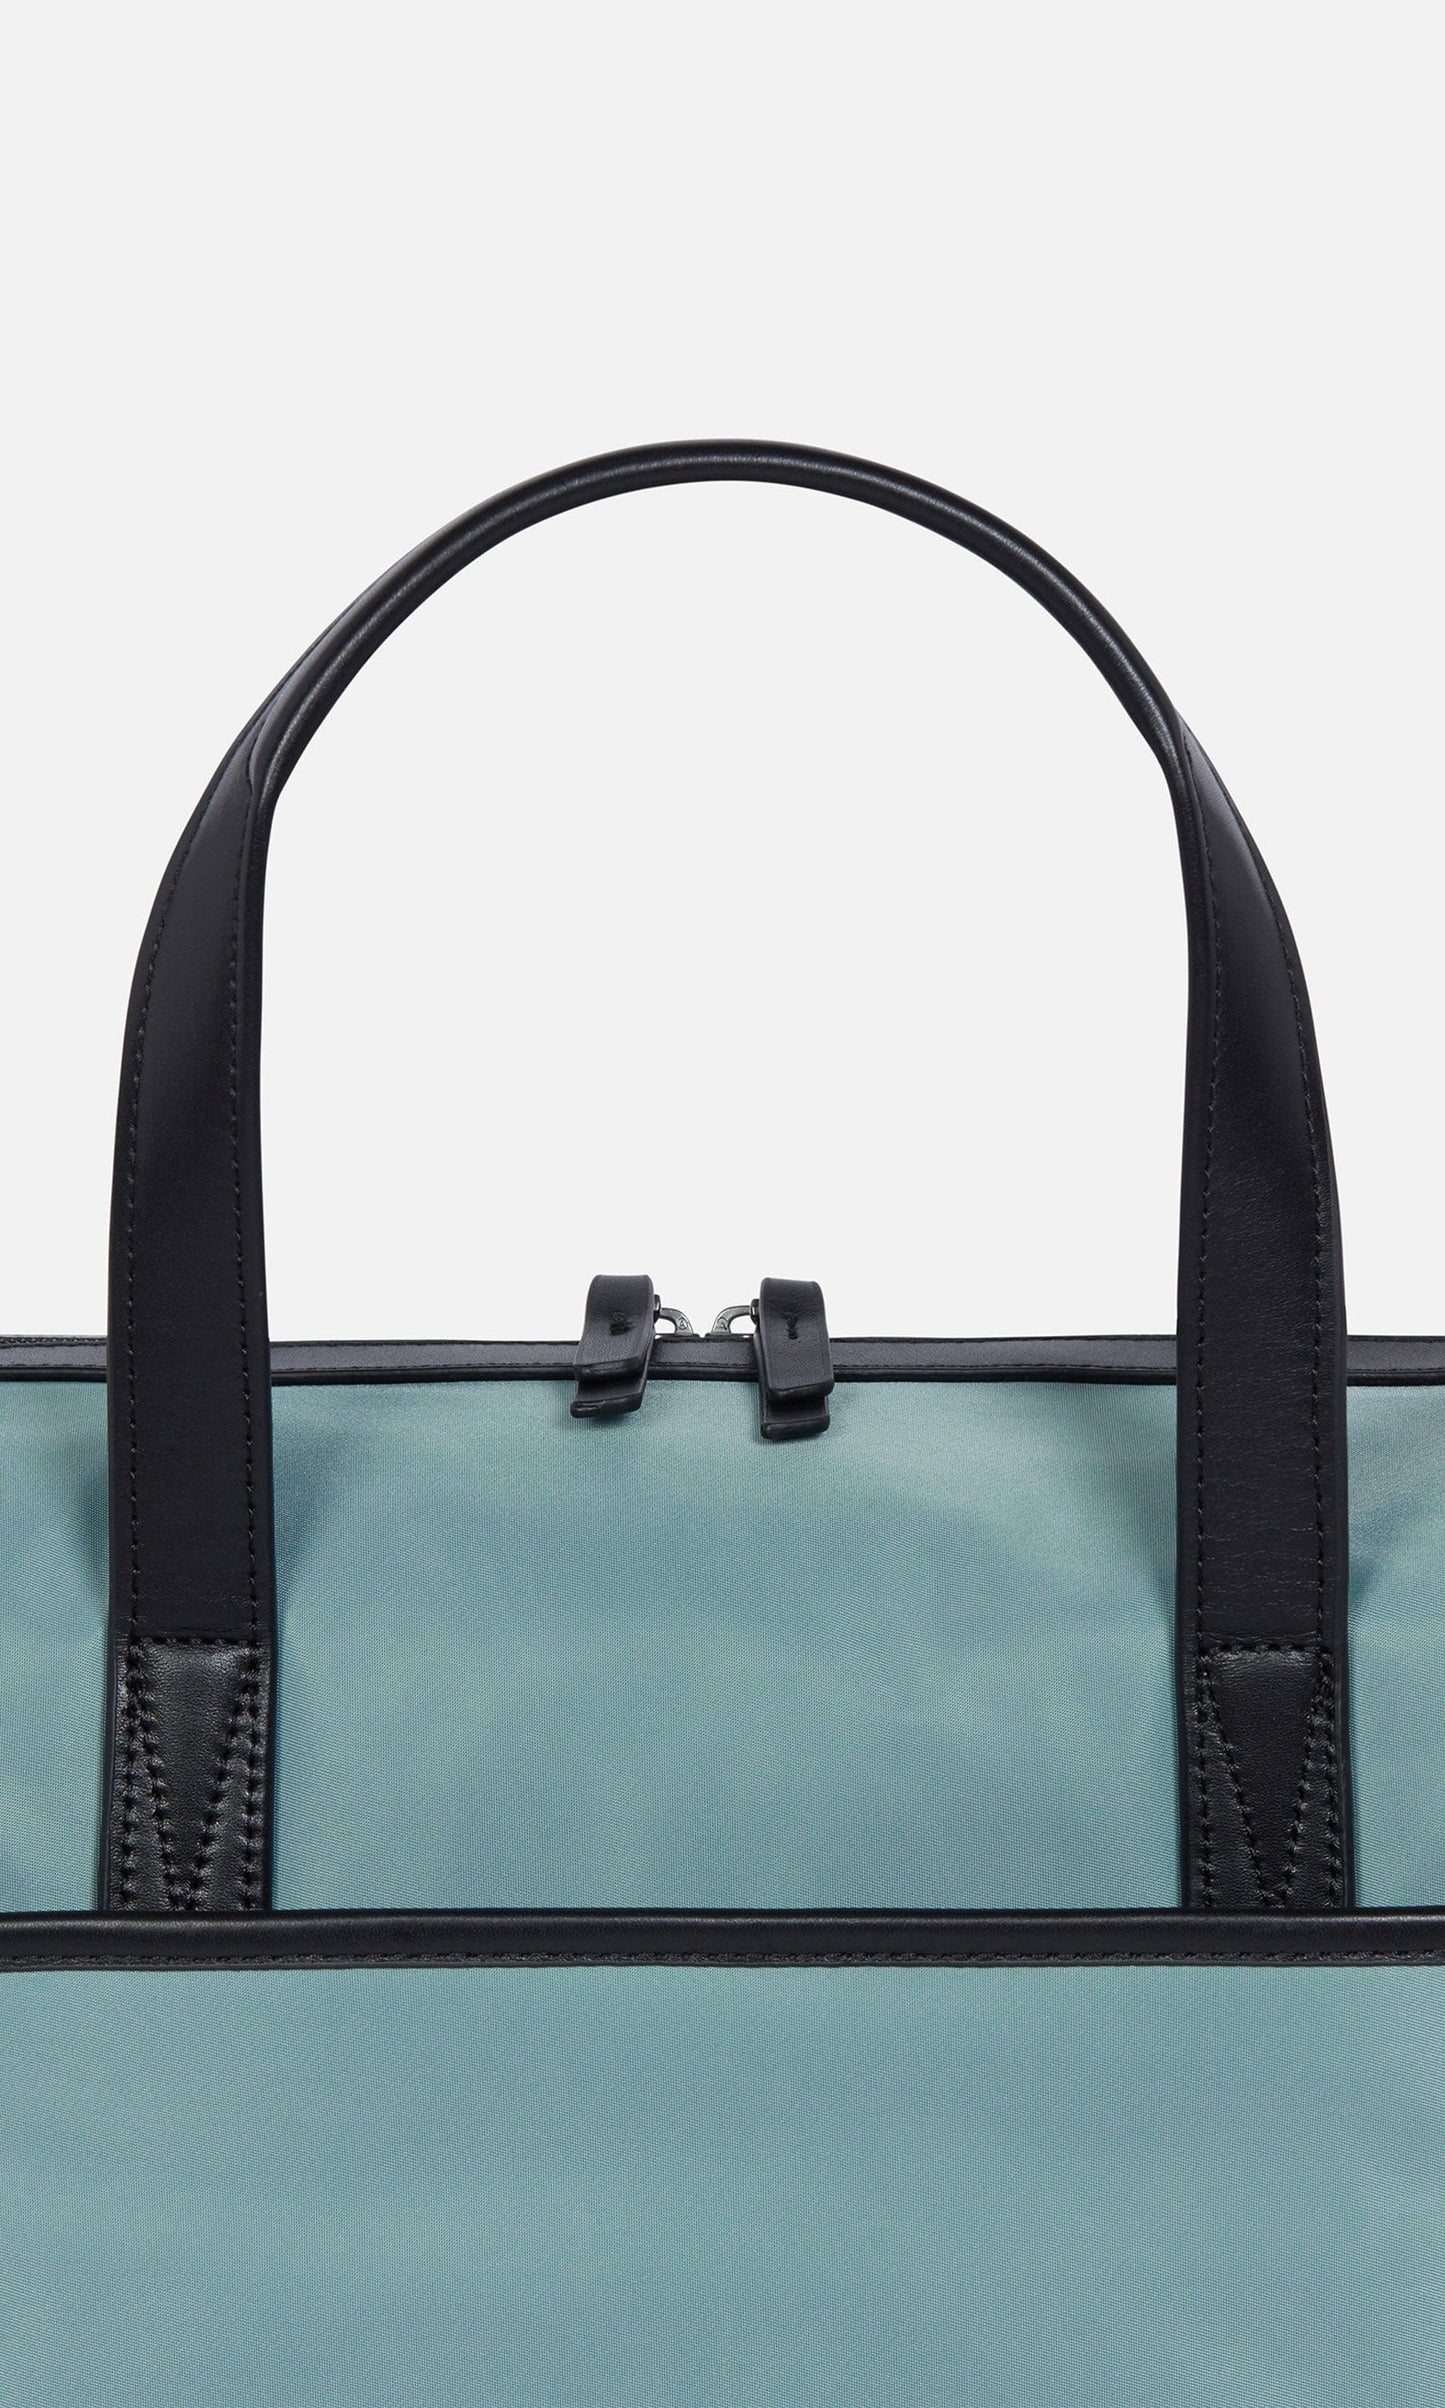 Antler Luggage -  Chelsea overnight bag in mineral - Overnight Bags Chelsea Overnight Bag Mineral (Blue) | Lifestyle Bags | Antler UK